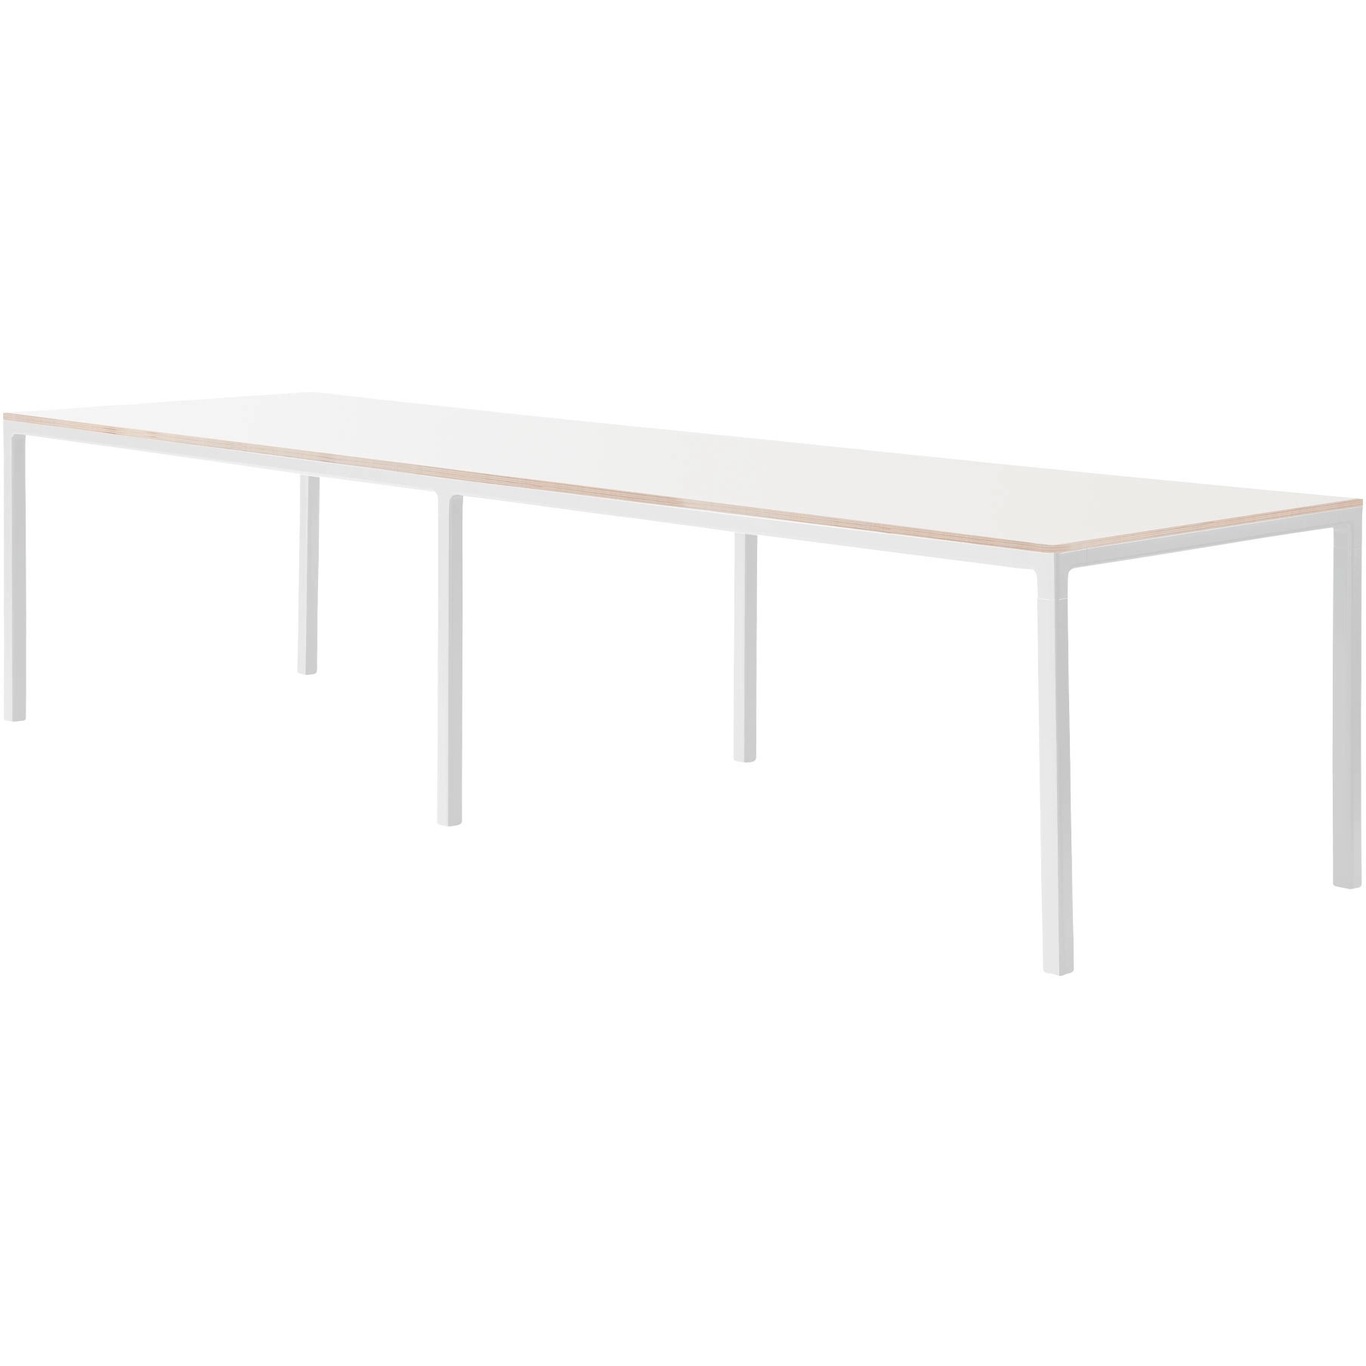 T12 Table 120x320 cm, White